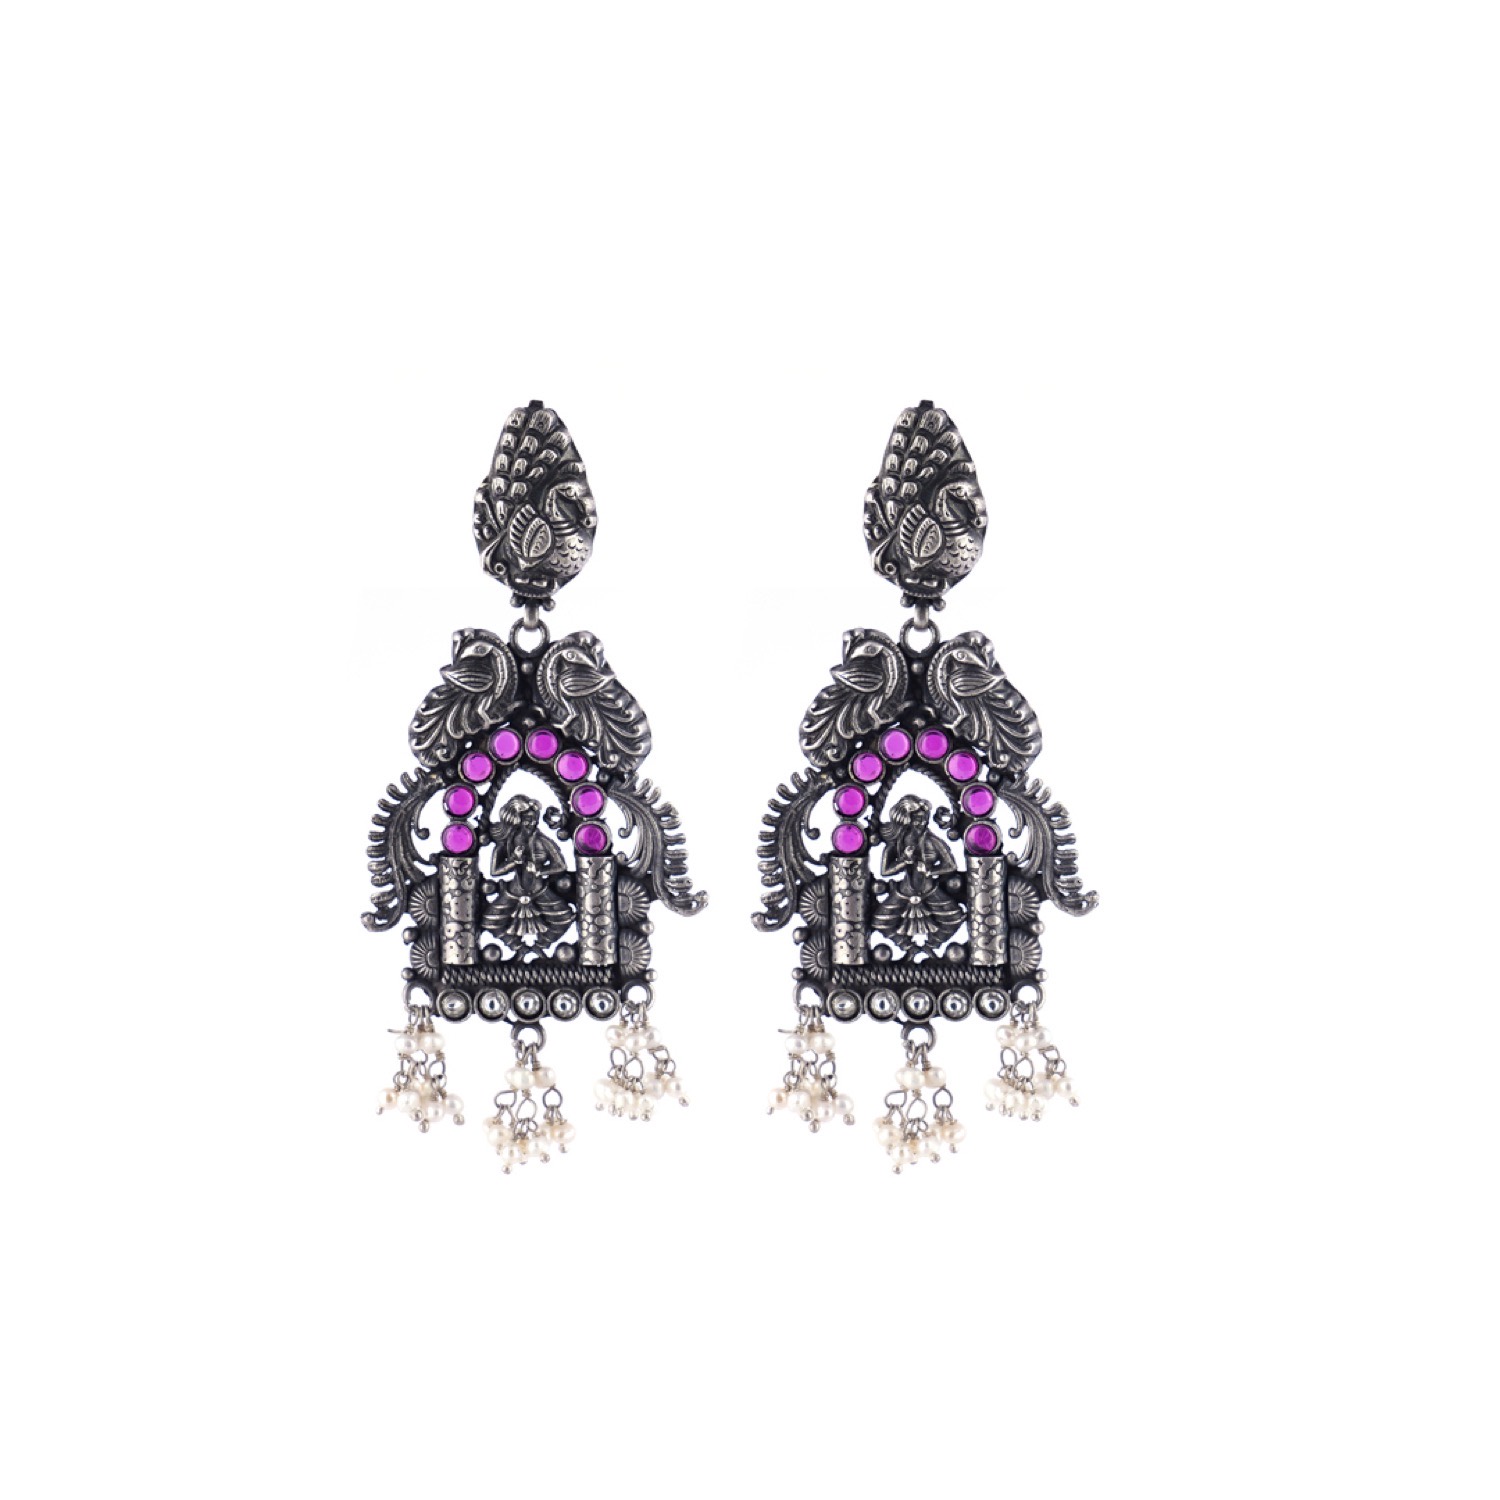 varam_earrings_102022_peacock_and_dancing_lady_with_pink_stone_oxidised_silver_earrings-1